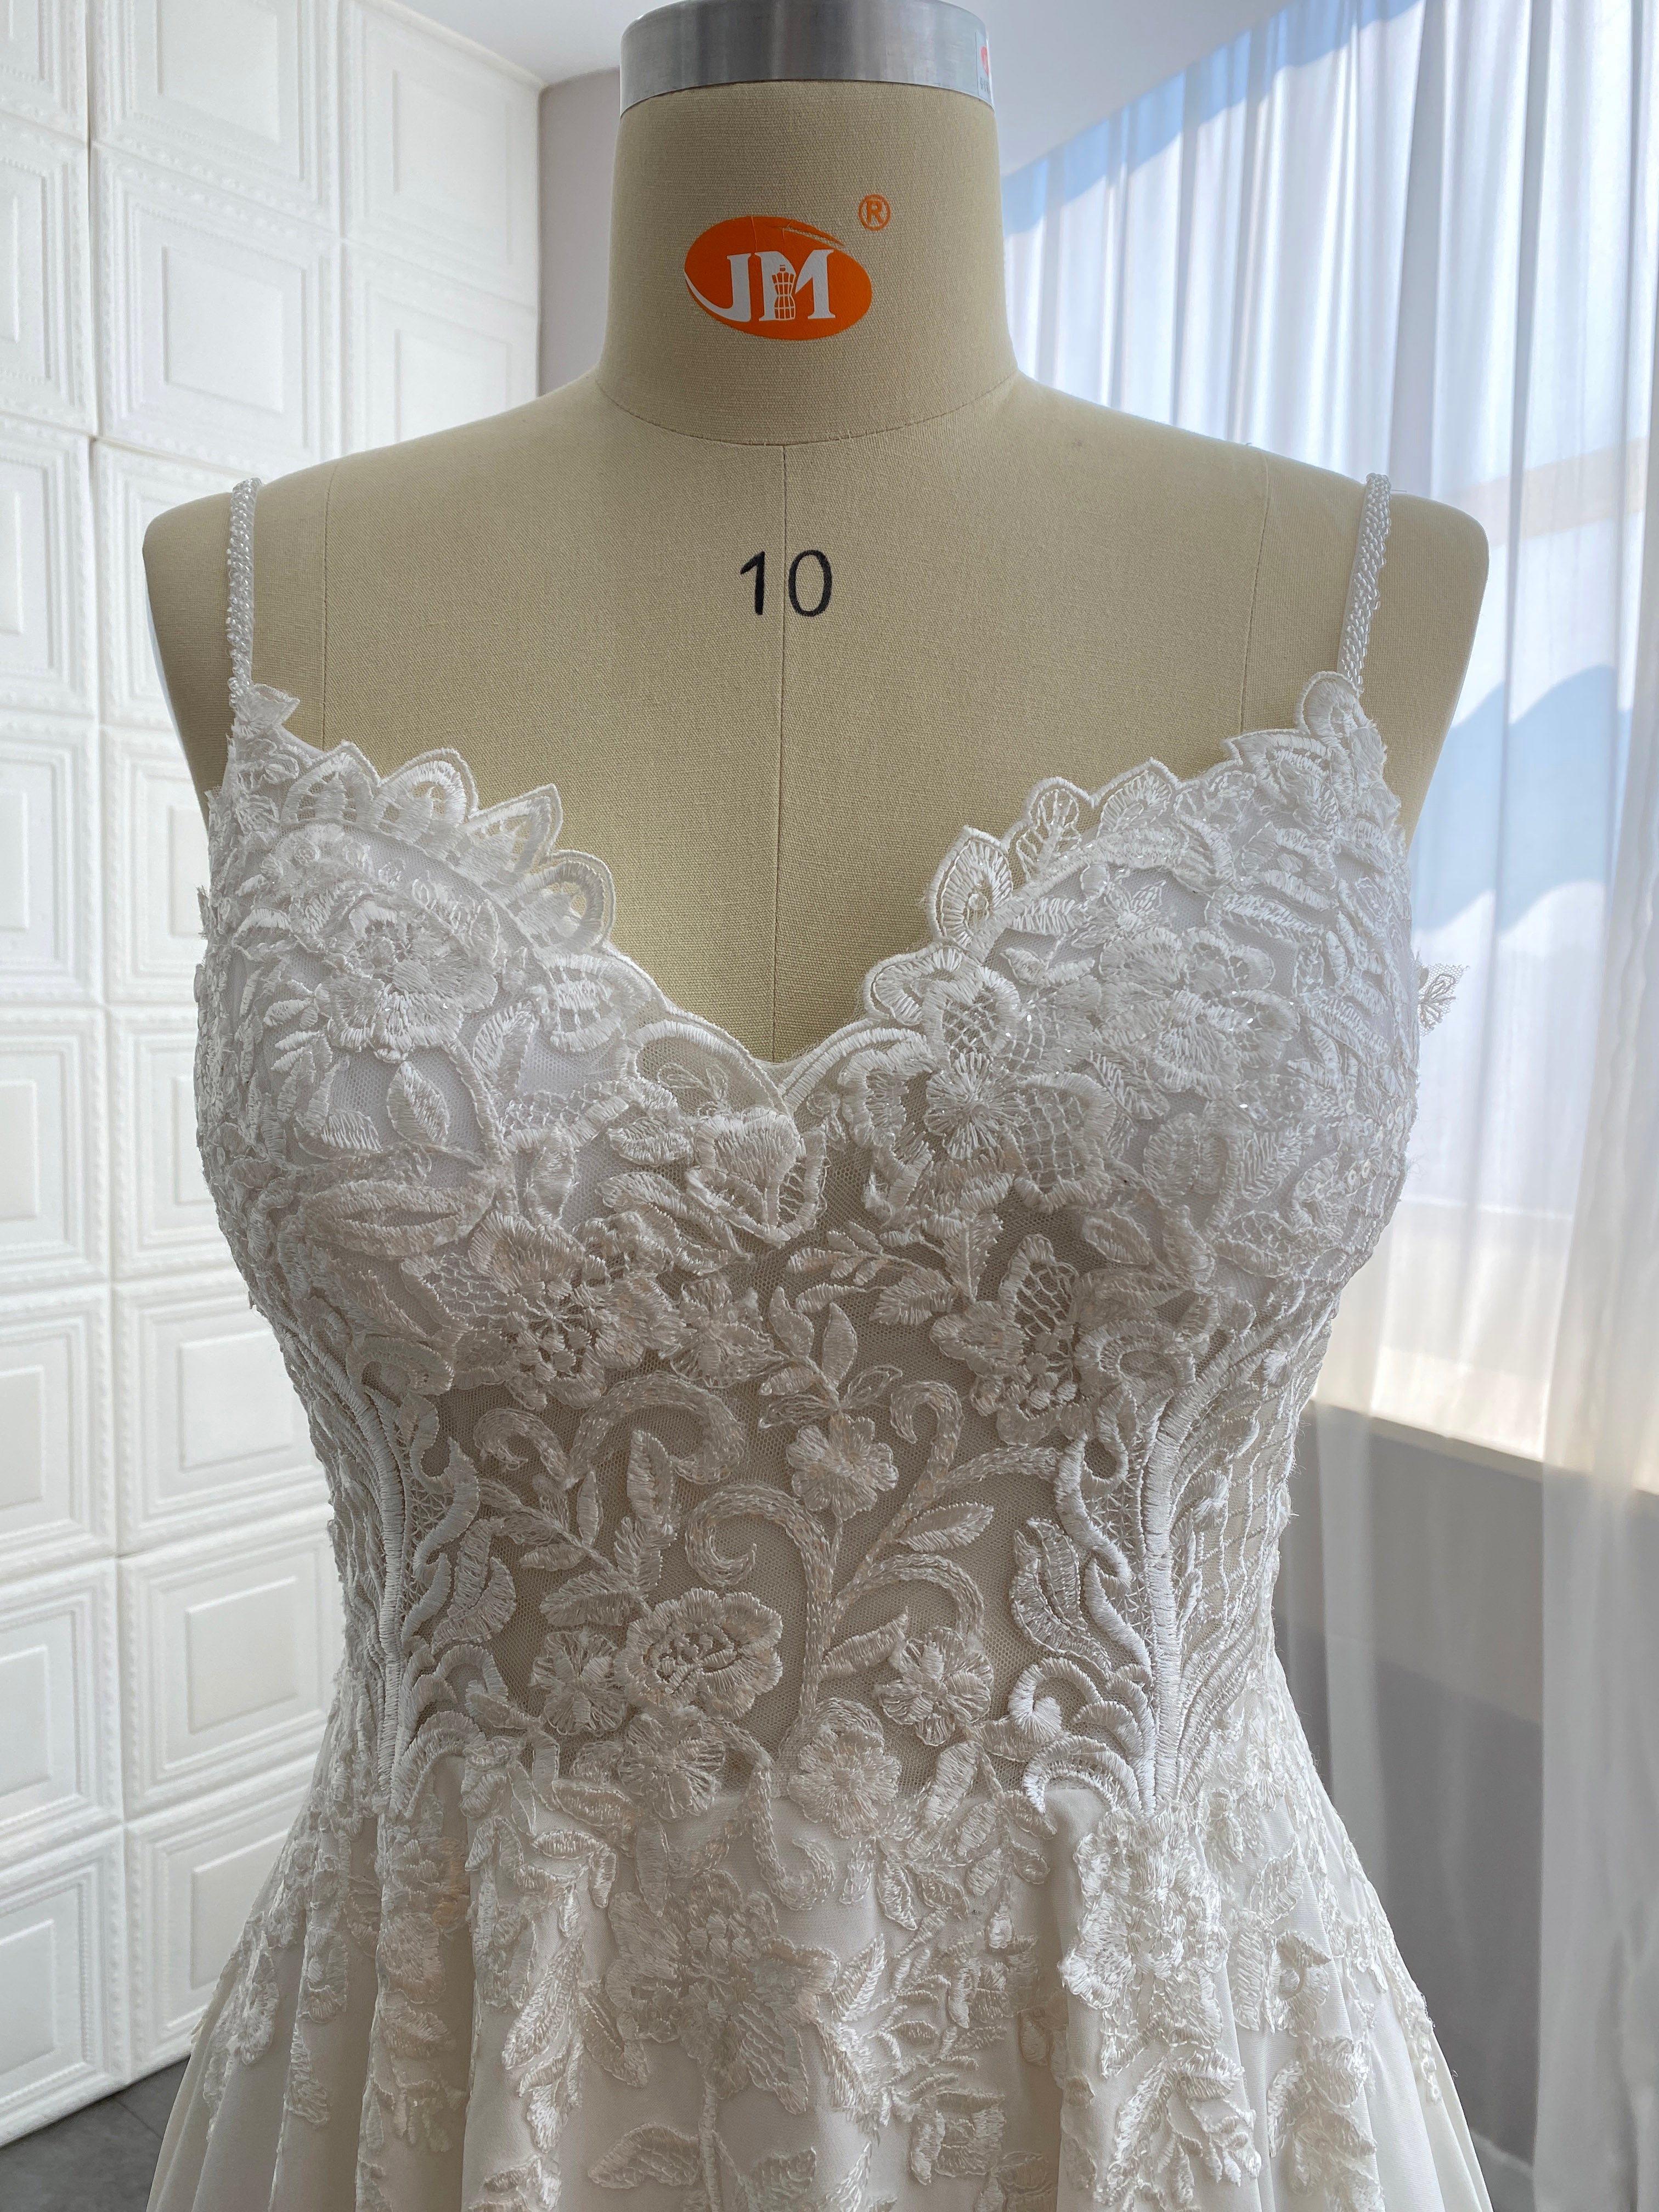 Spaghetti Long A-line Lace Satin Wedding Dresses, A-line Bridal Gown, Sweep Train Wedding Dresses, 2021 Wedding Dresses